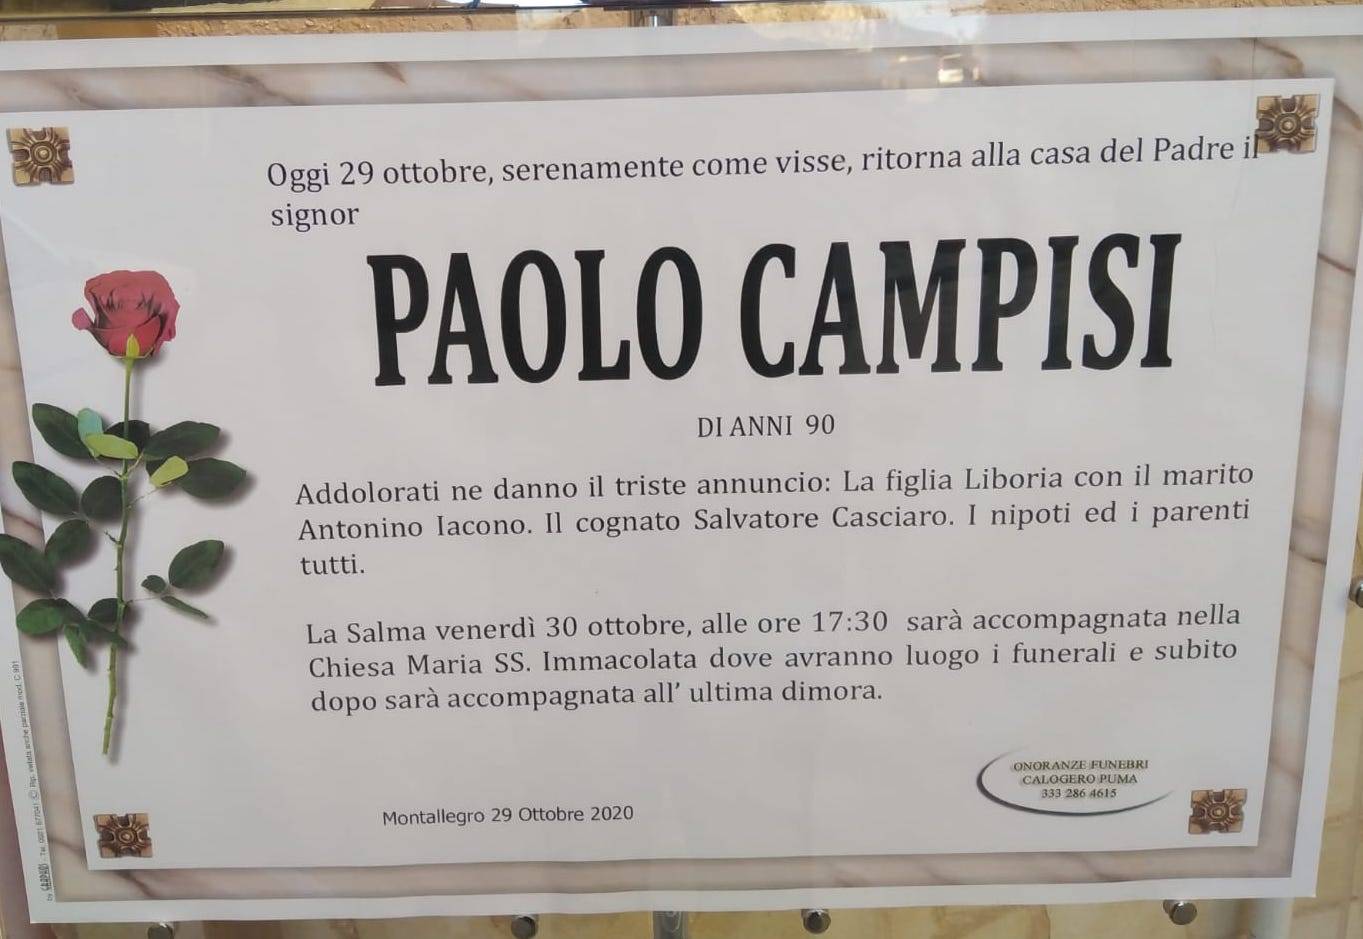 Paolo Campisi